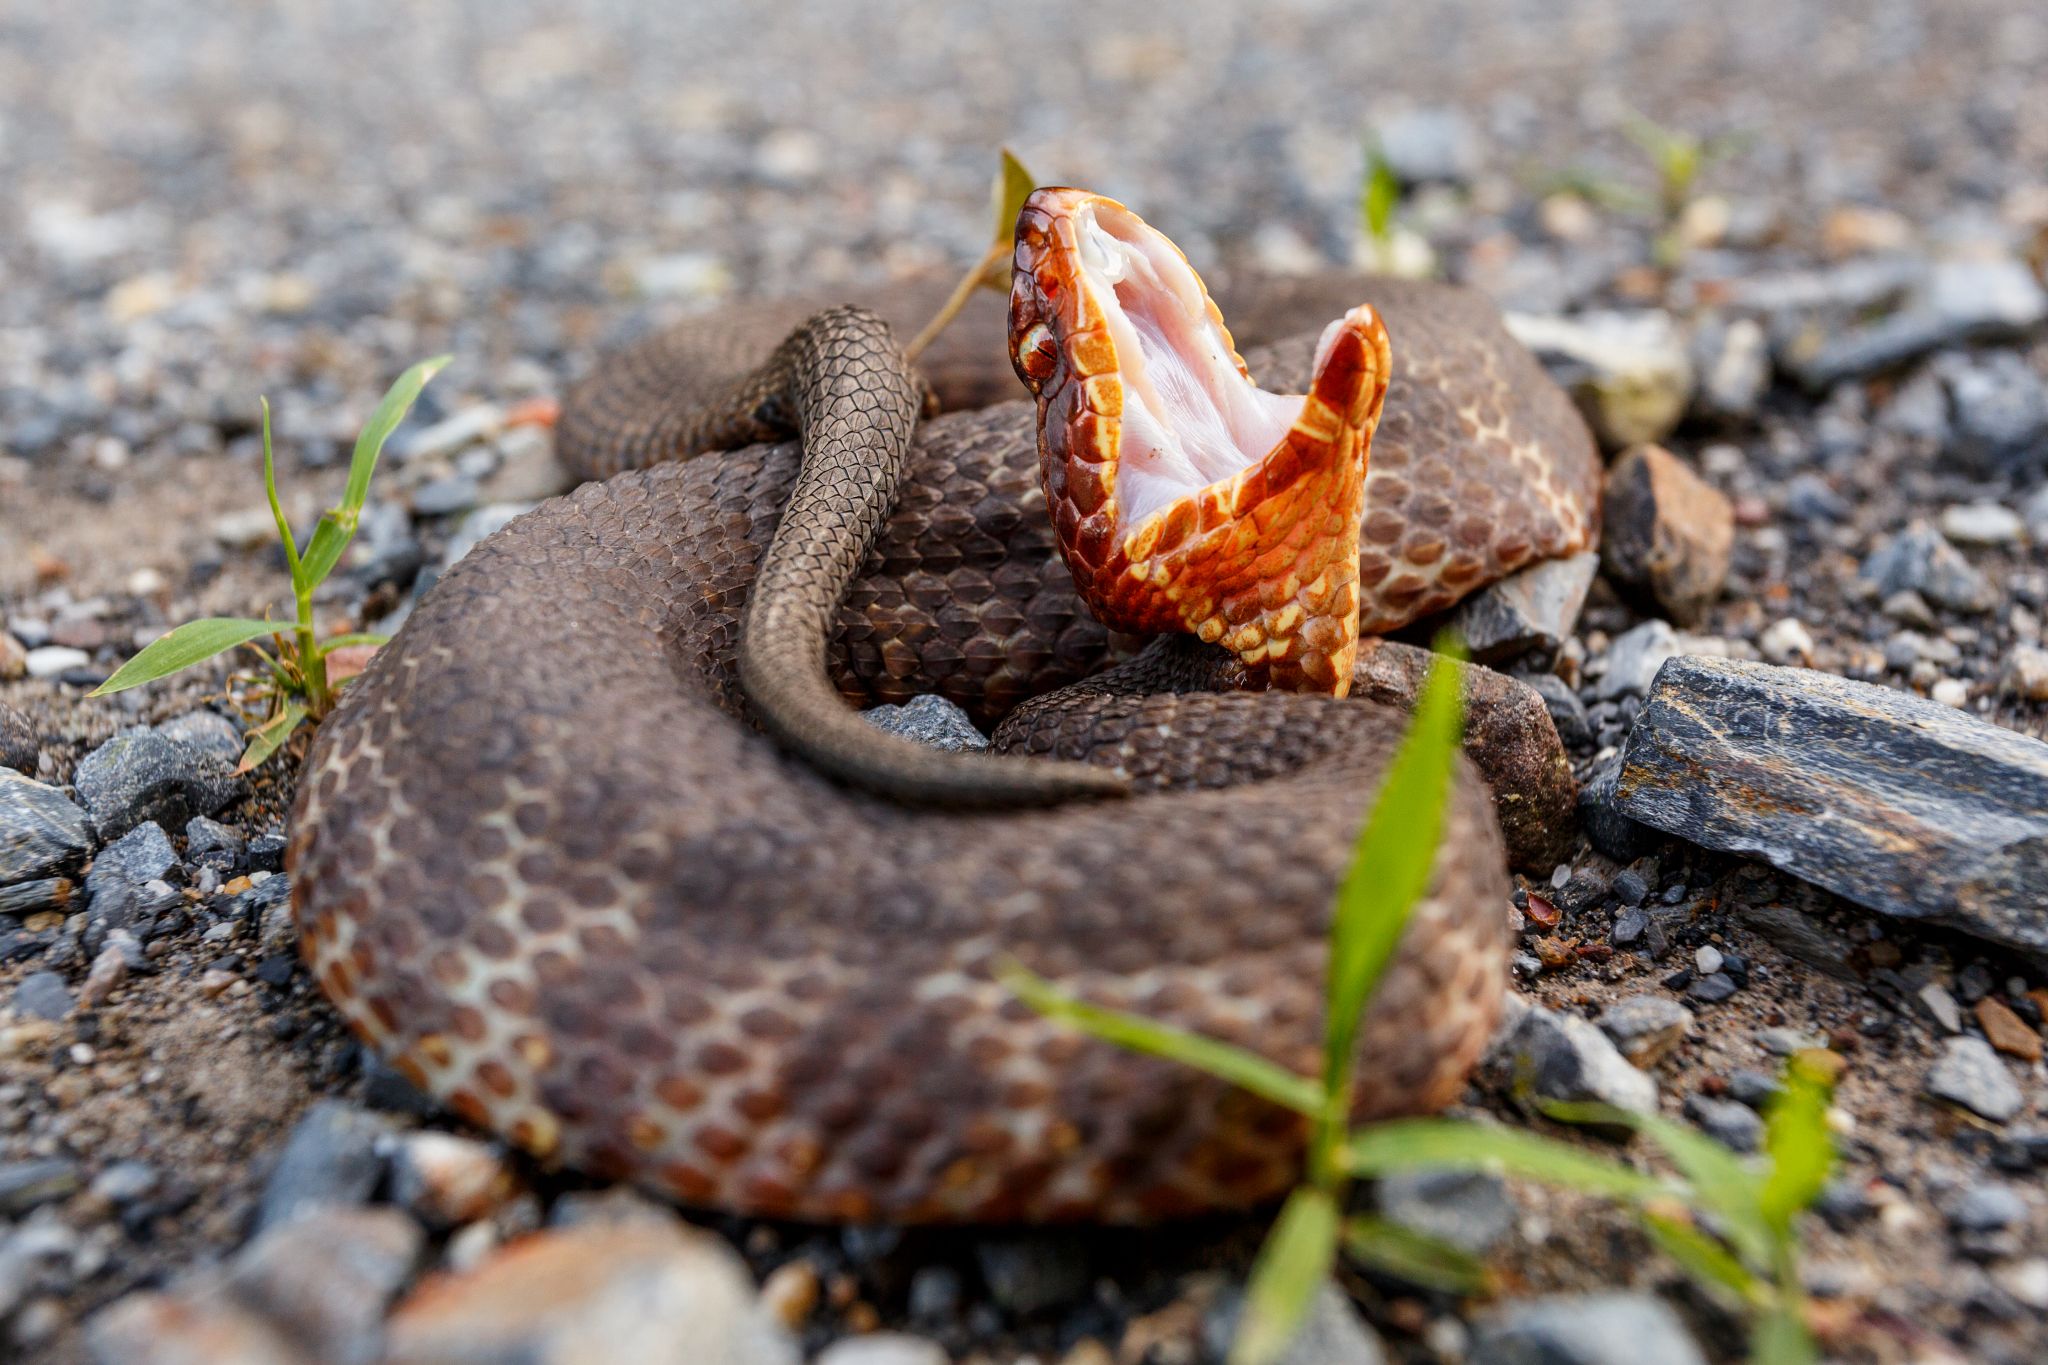 Man discovers he encountered a venomous snake while visiting Battleship Texas ...